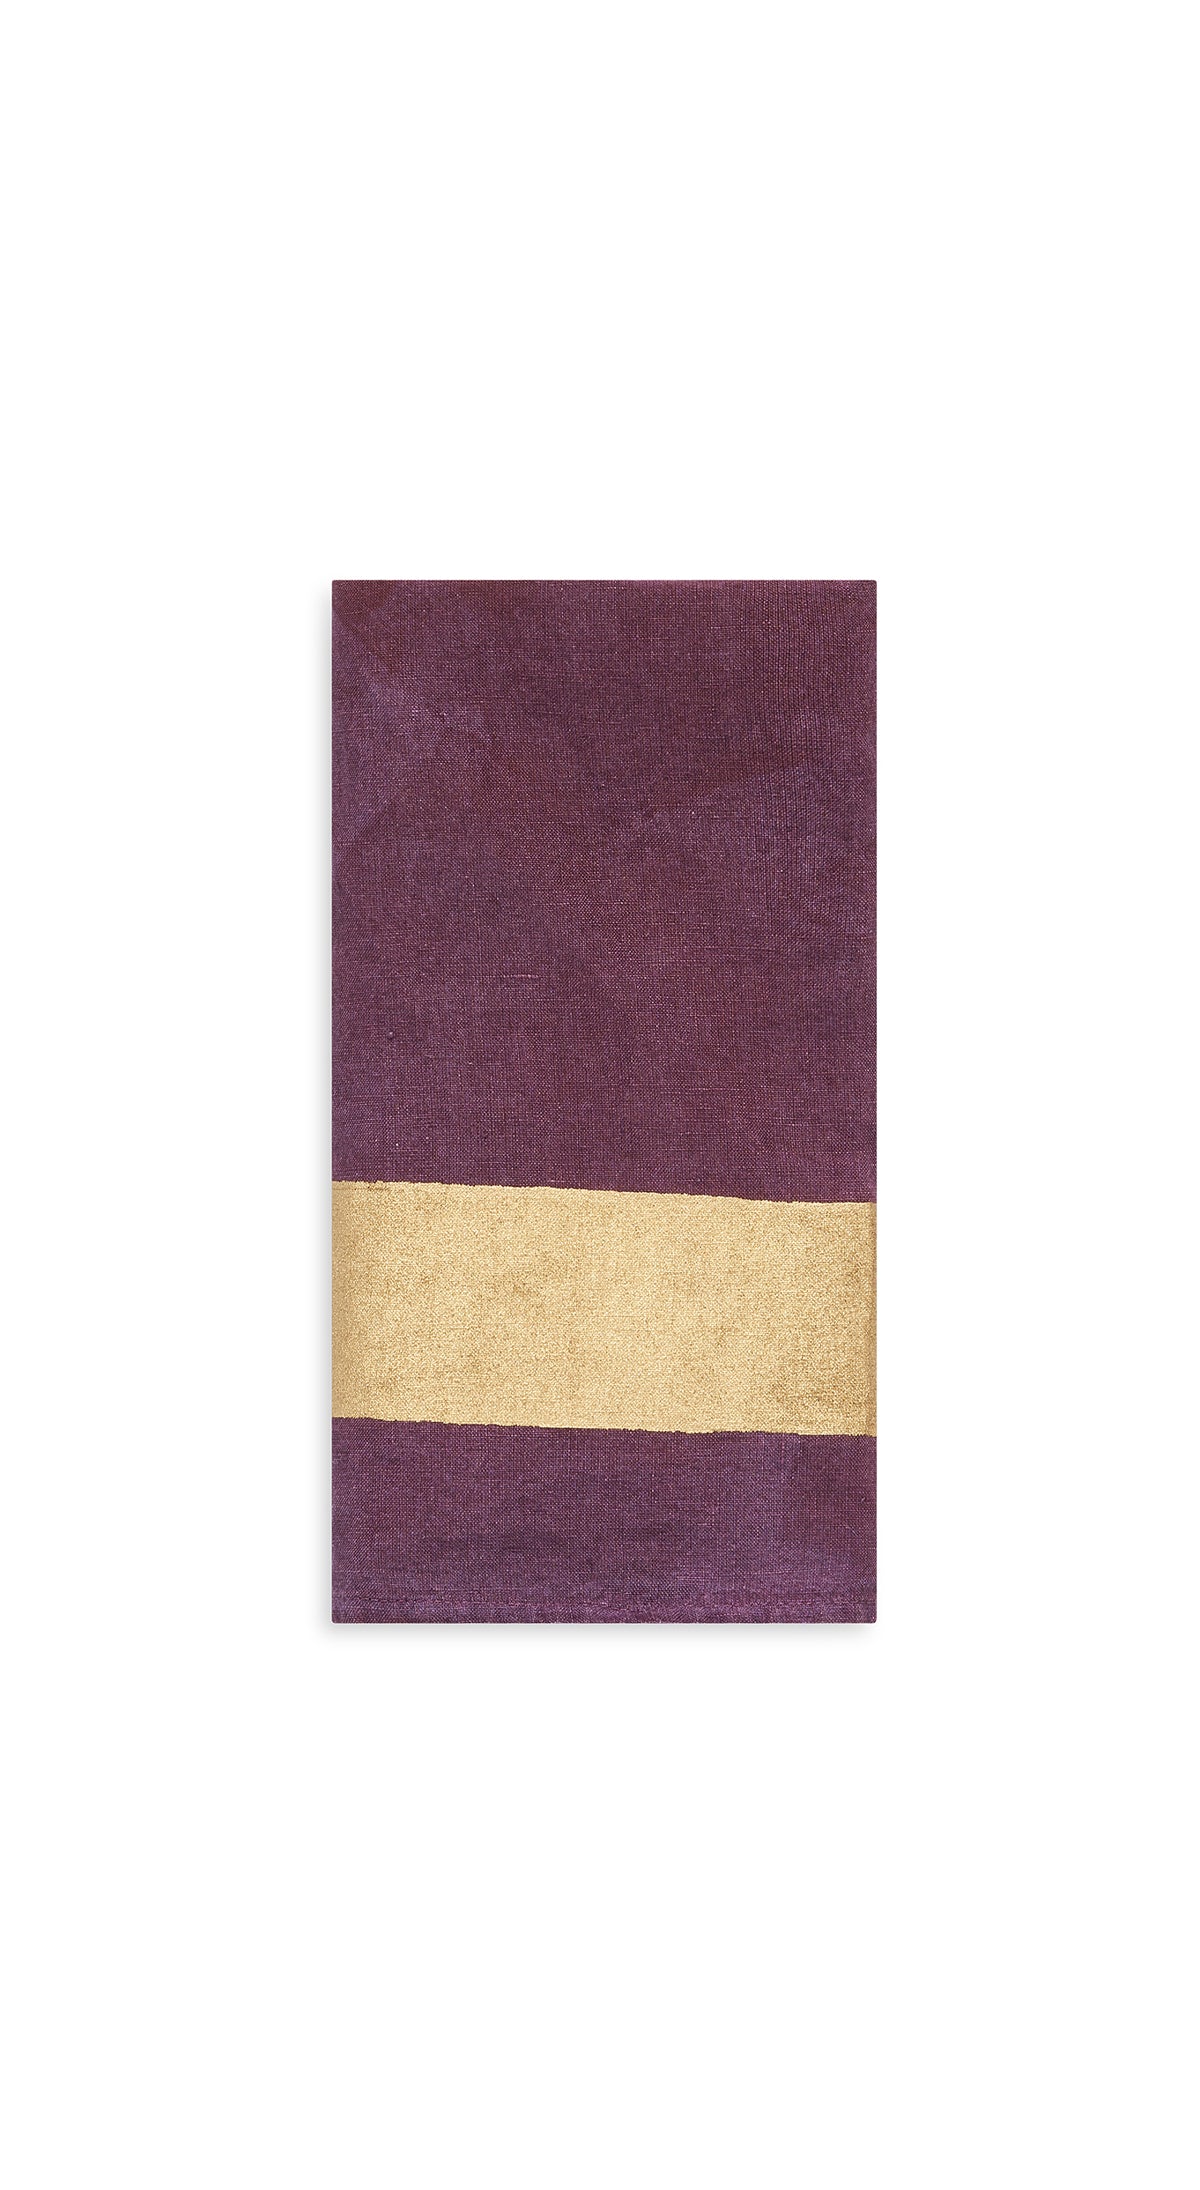 Full Field Cornice Linen Napkin in Grape Purple & Gold, 50x50cm